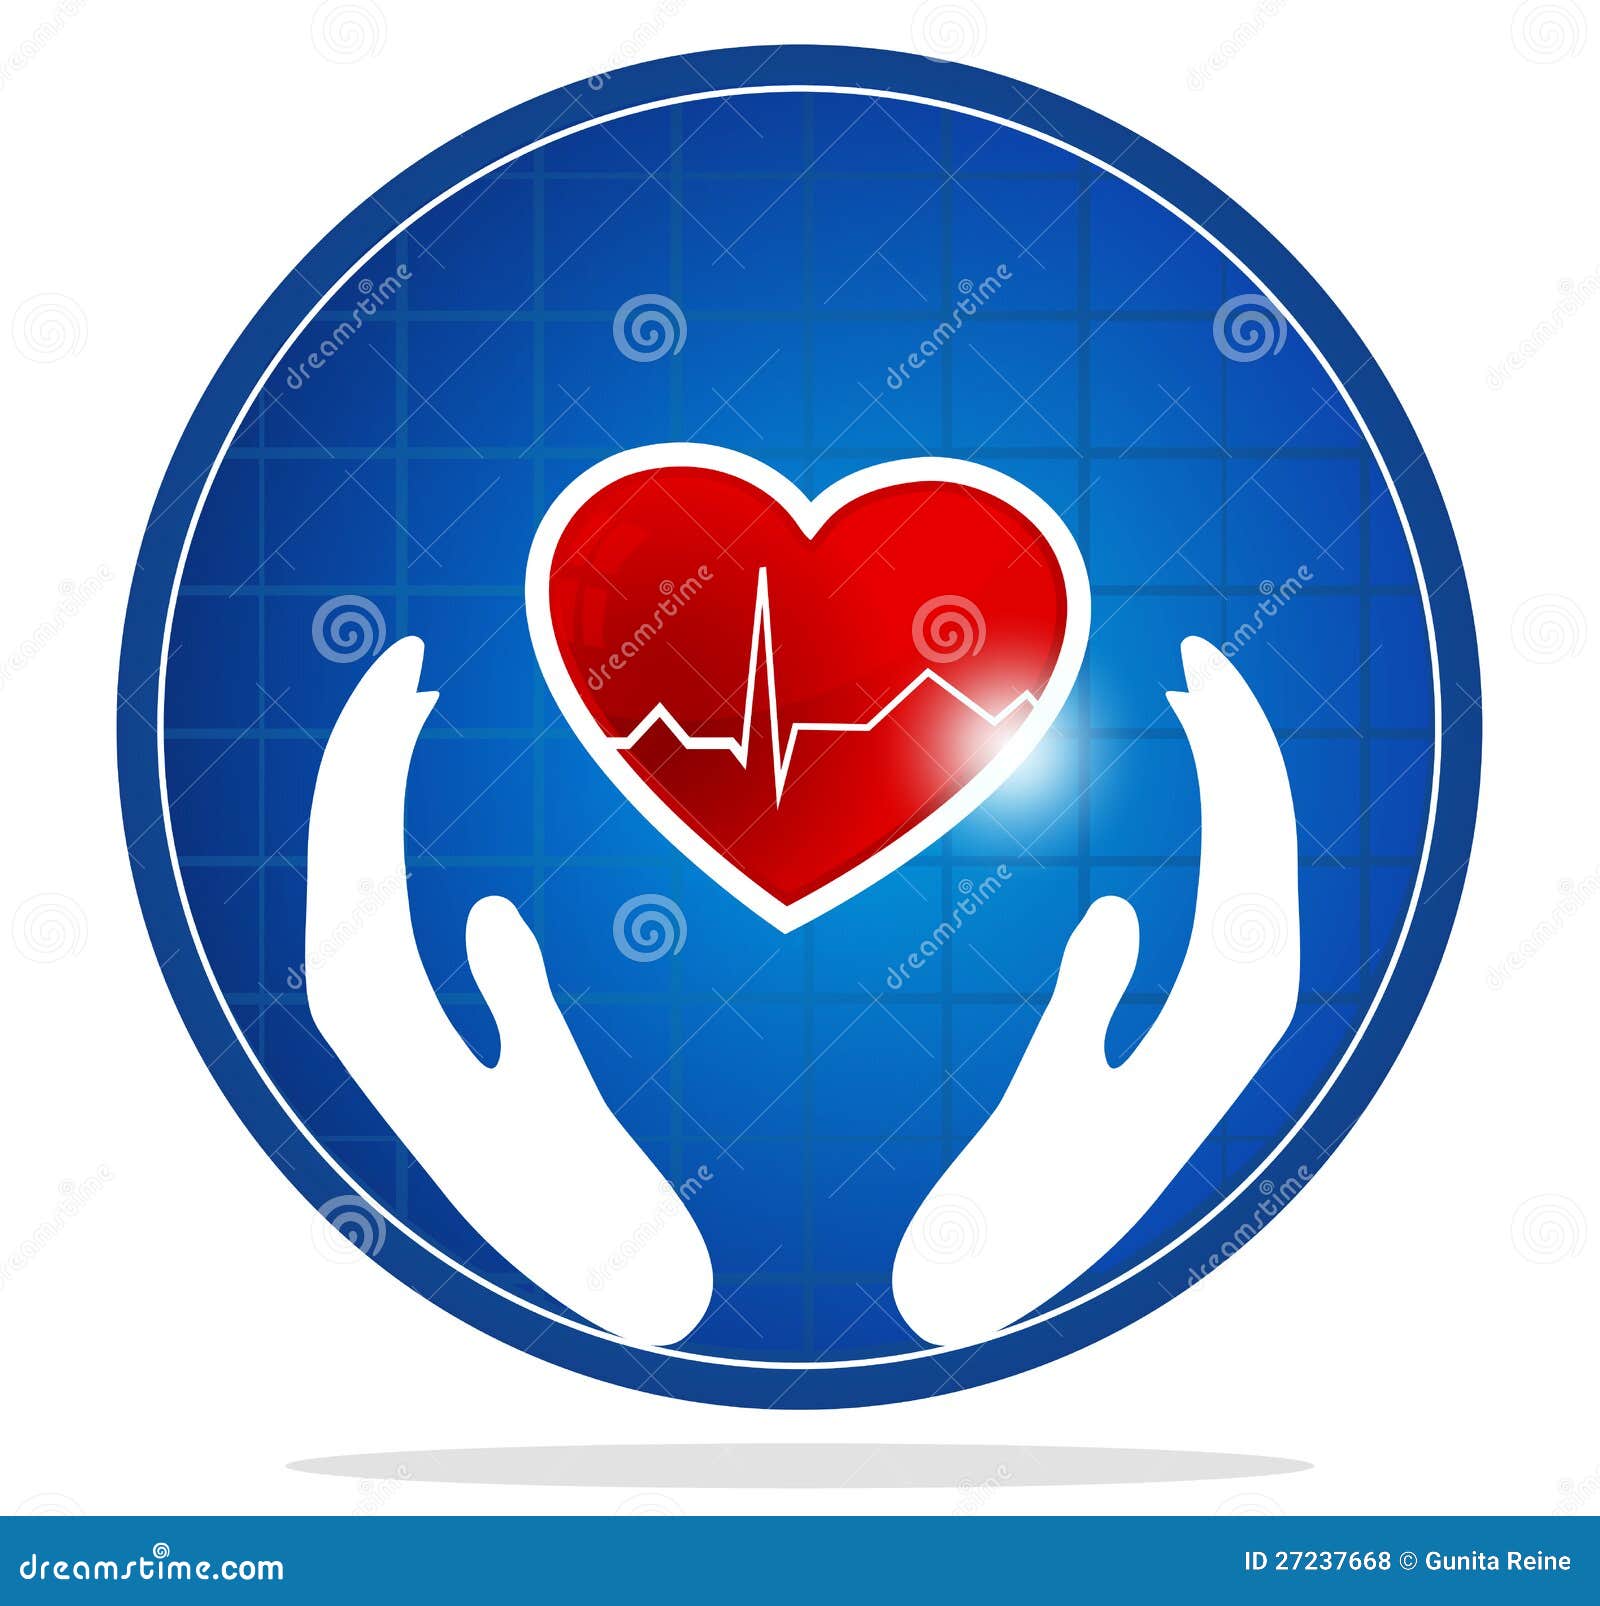 Human Heart Protection Symbol Royalty Free Stock Photos Image 27237668